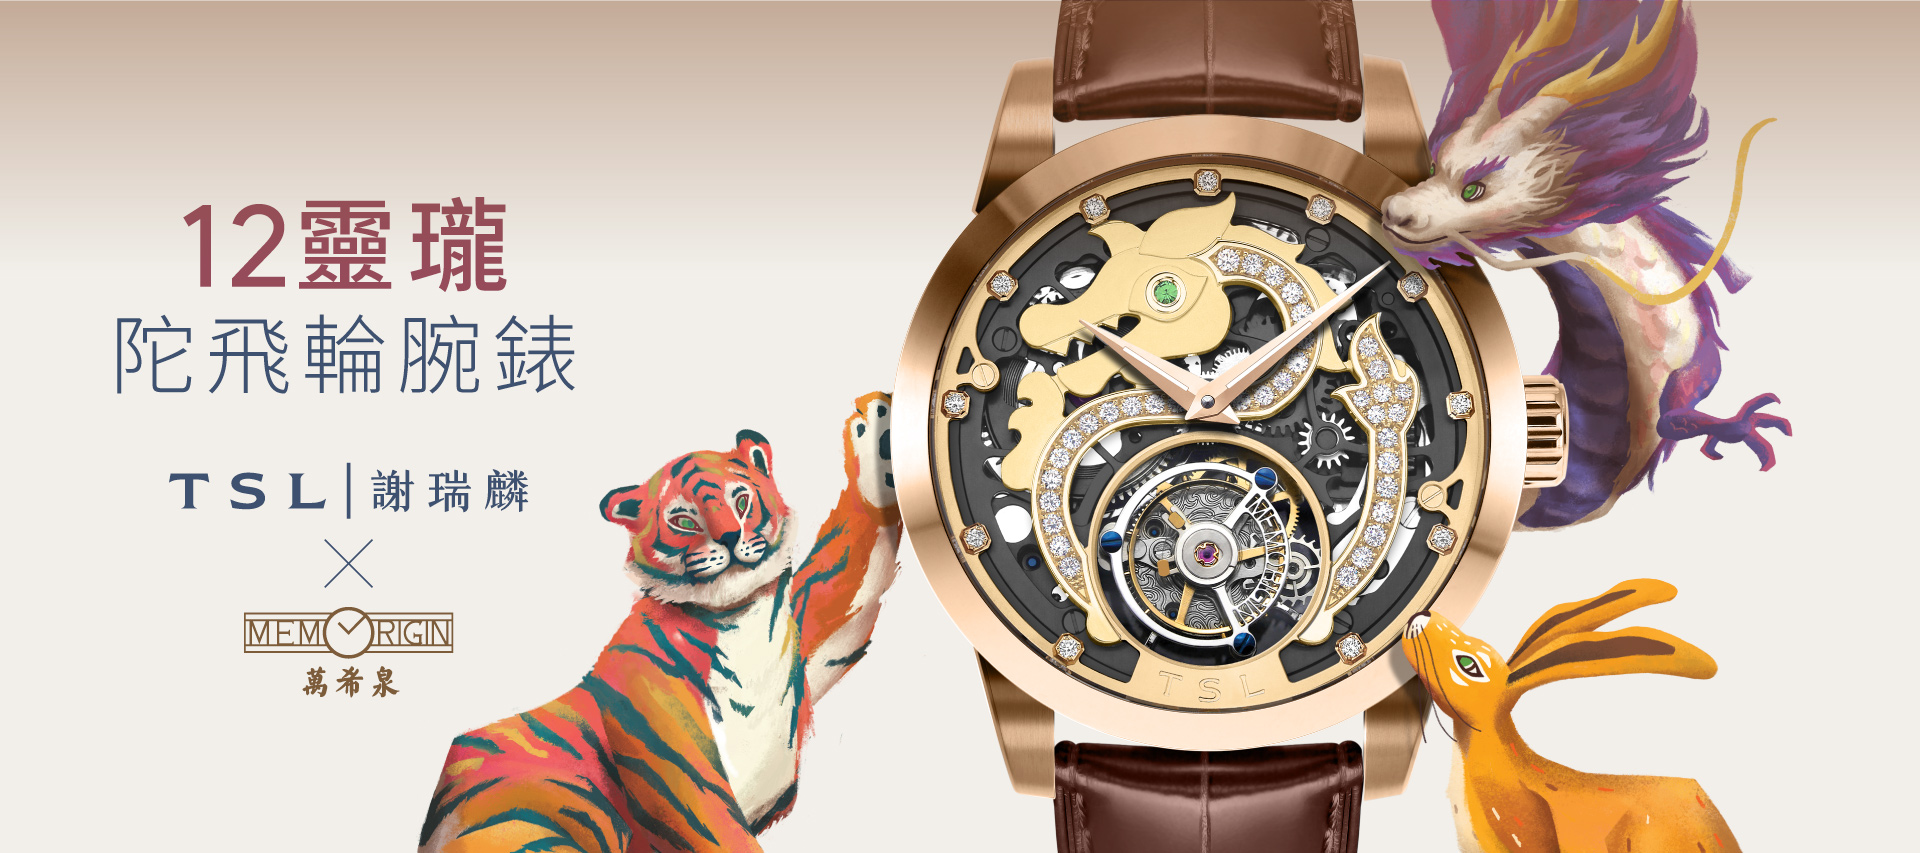 TSL | 謝瑞麟 香港官方網店 12靈瓏陀飛輪腕錶